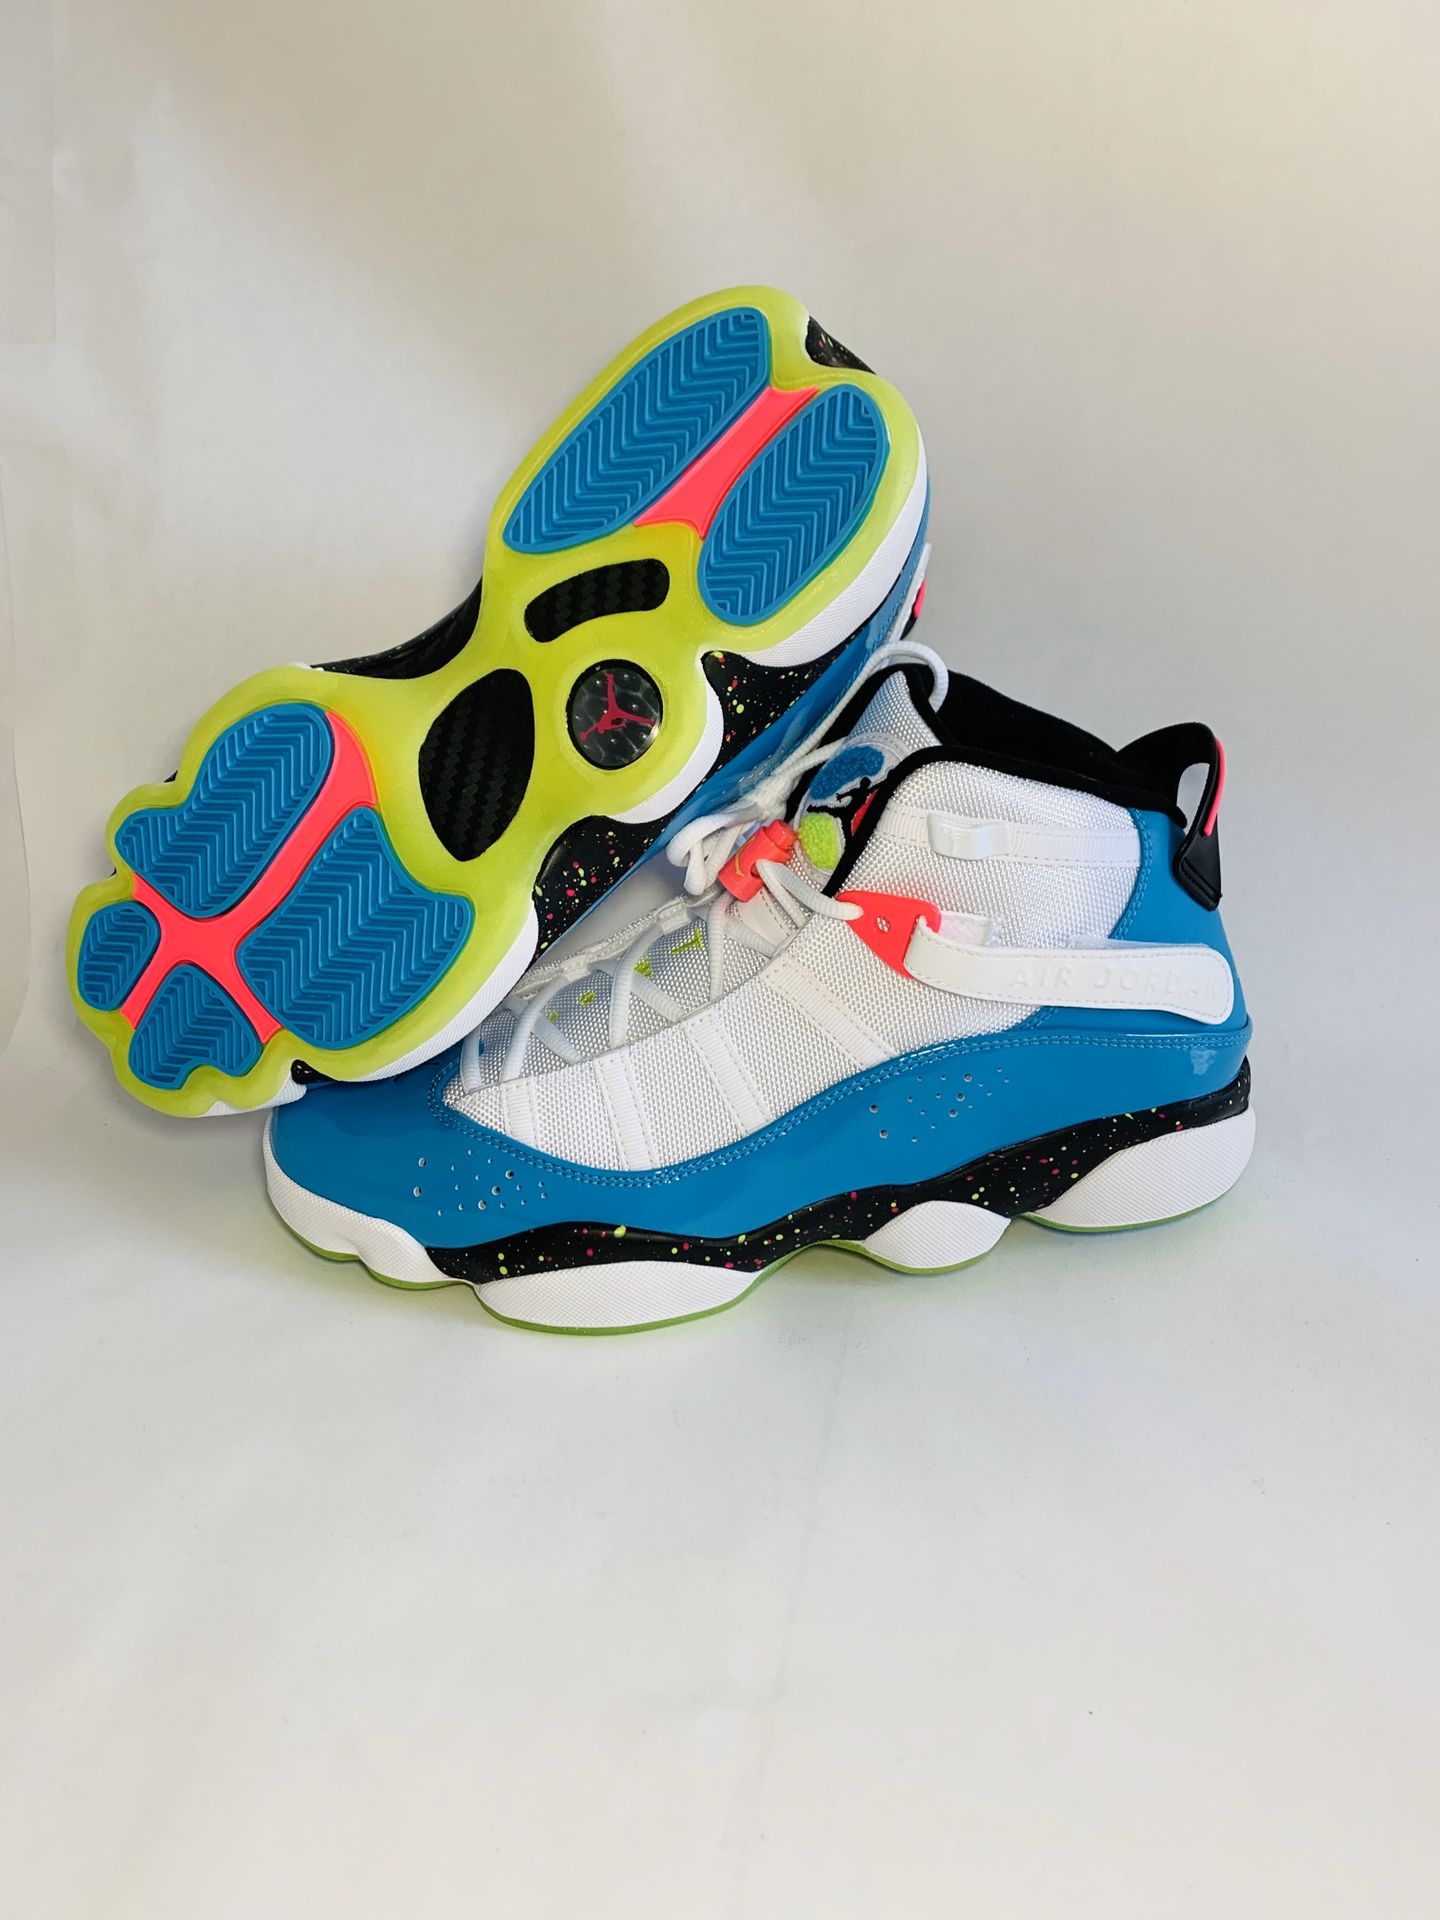 NEW Nike Air Jordan 6 Rings White Blue Pink Black size 10 men women 11.5